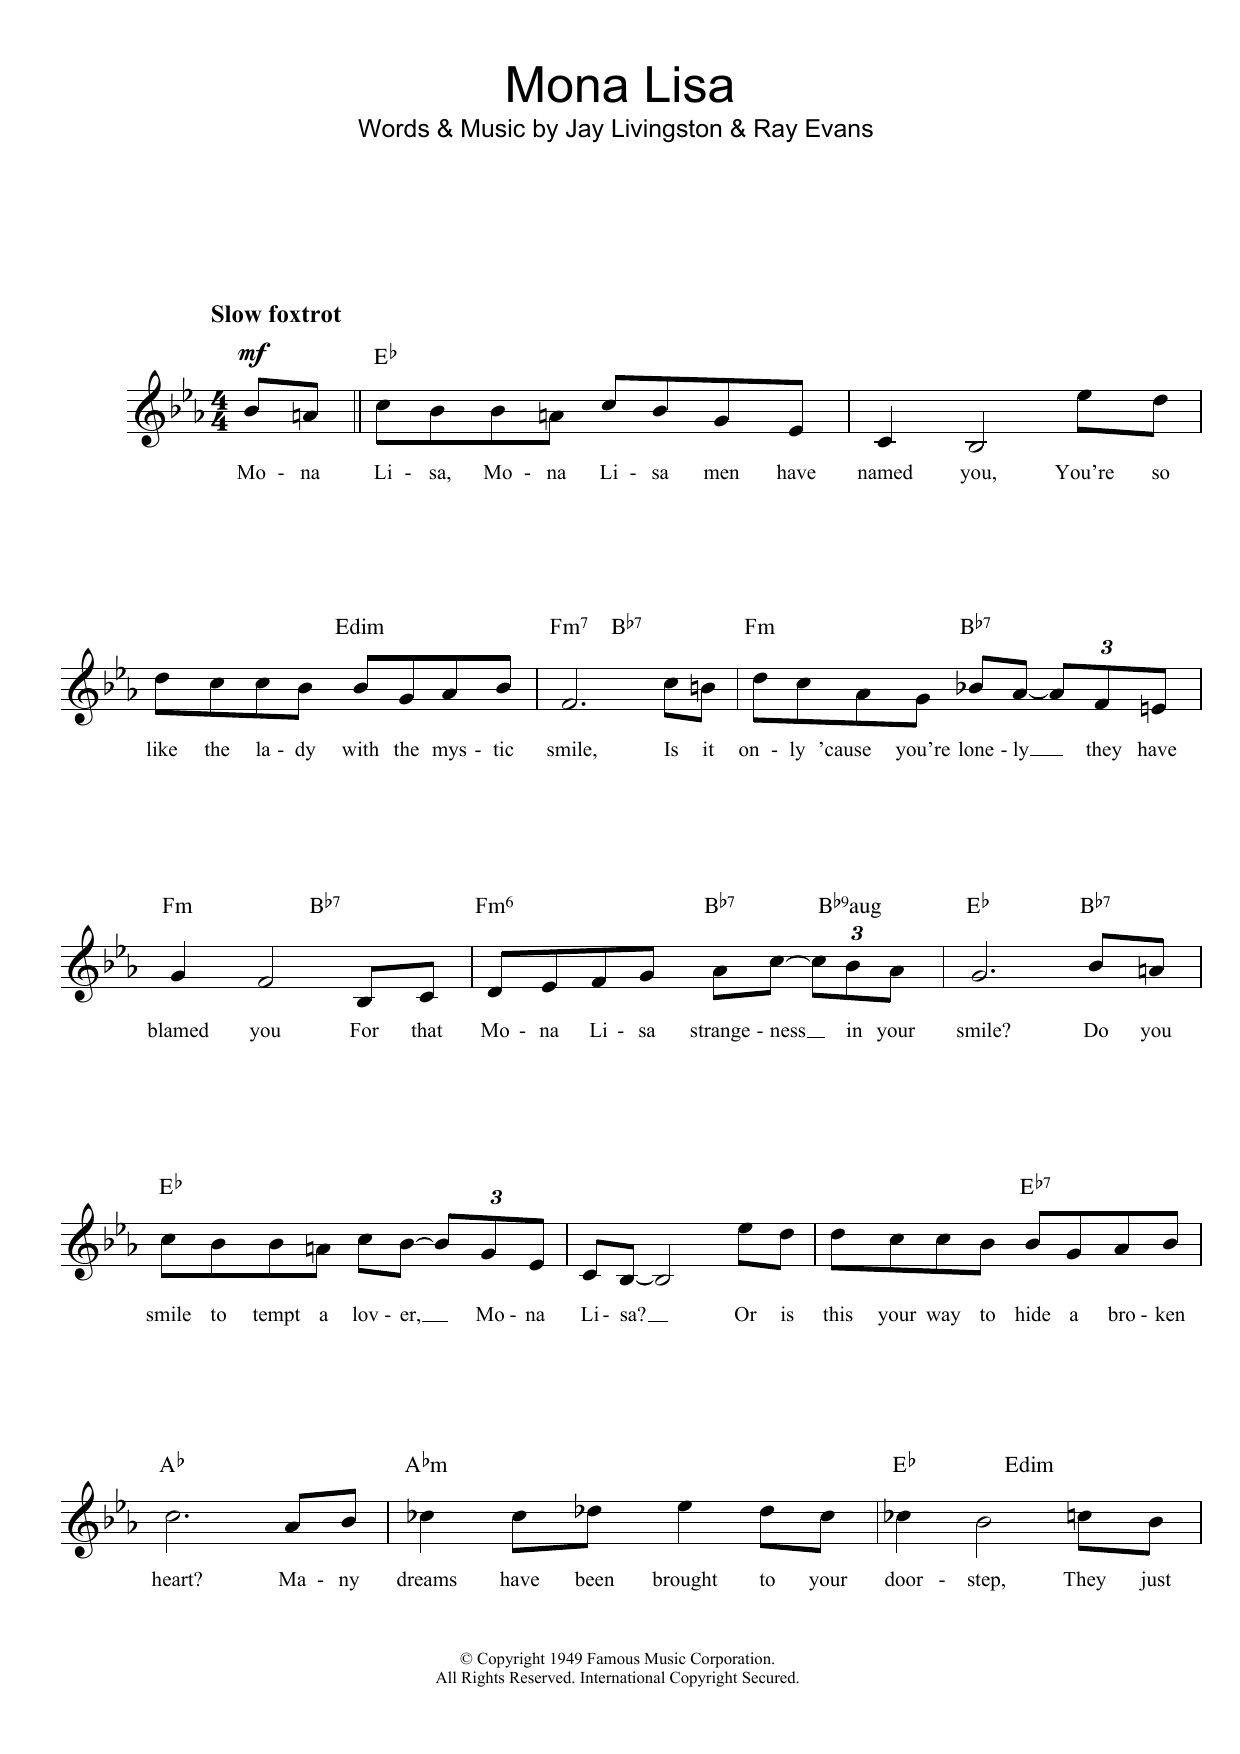 Nat King Cole Mona Lisa Sheet Music Notes & Chords for Piano - Download or Print PDF